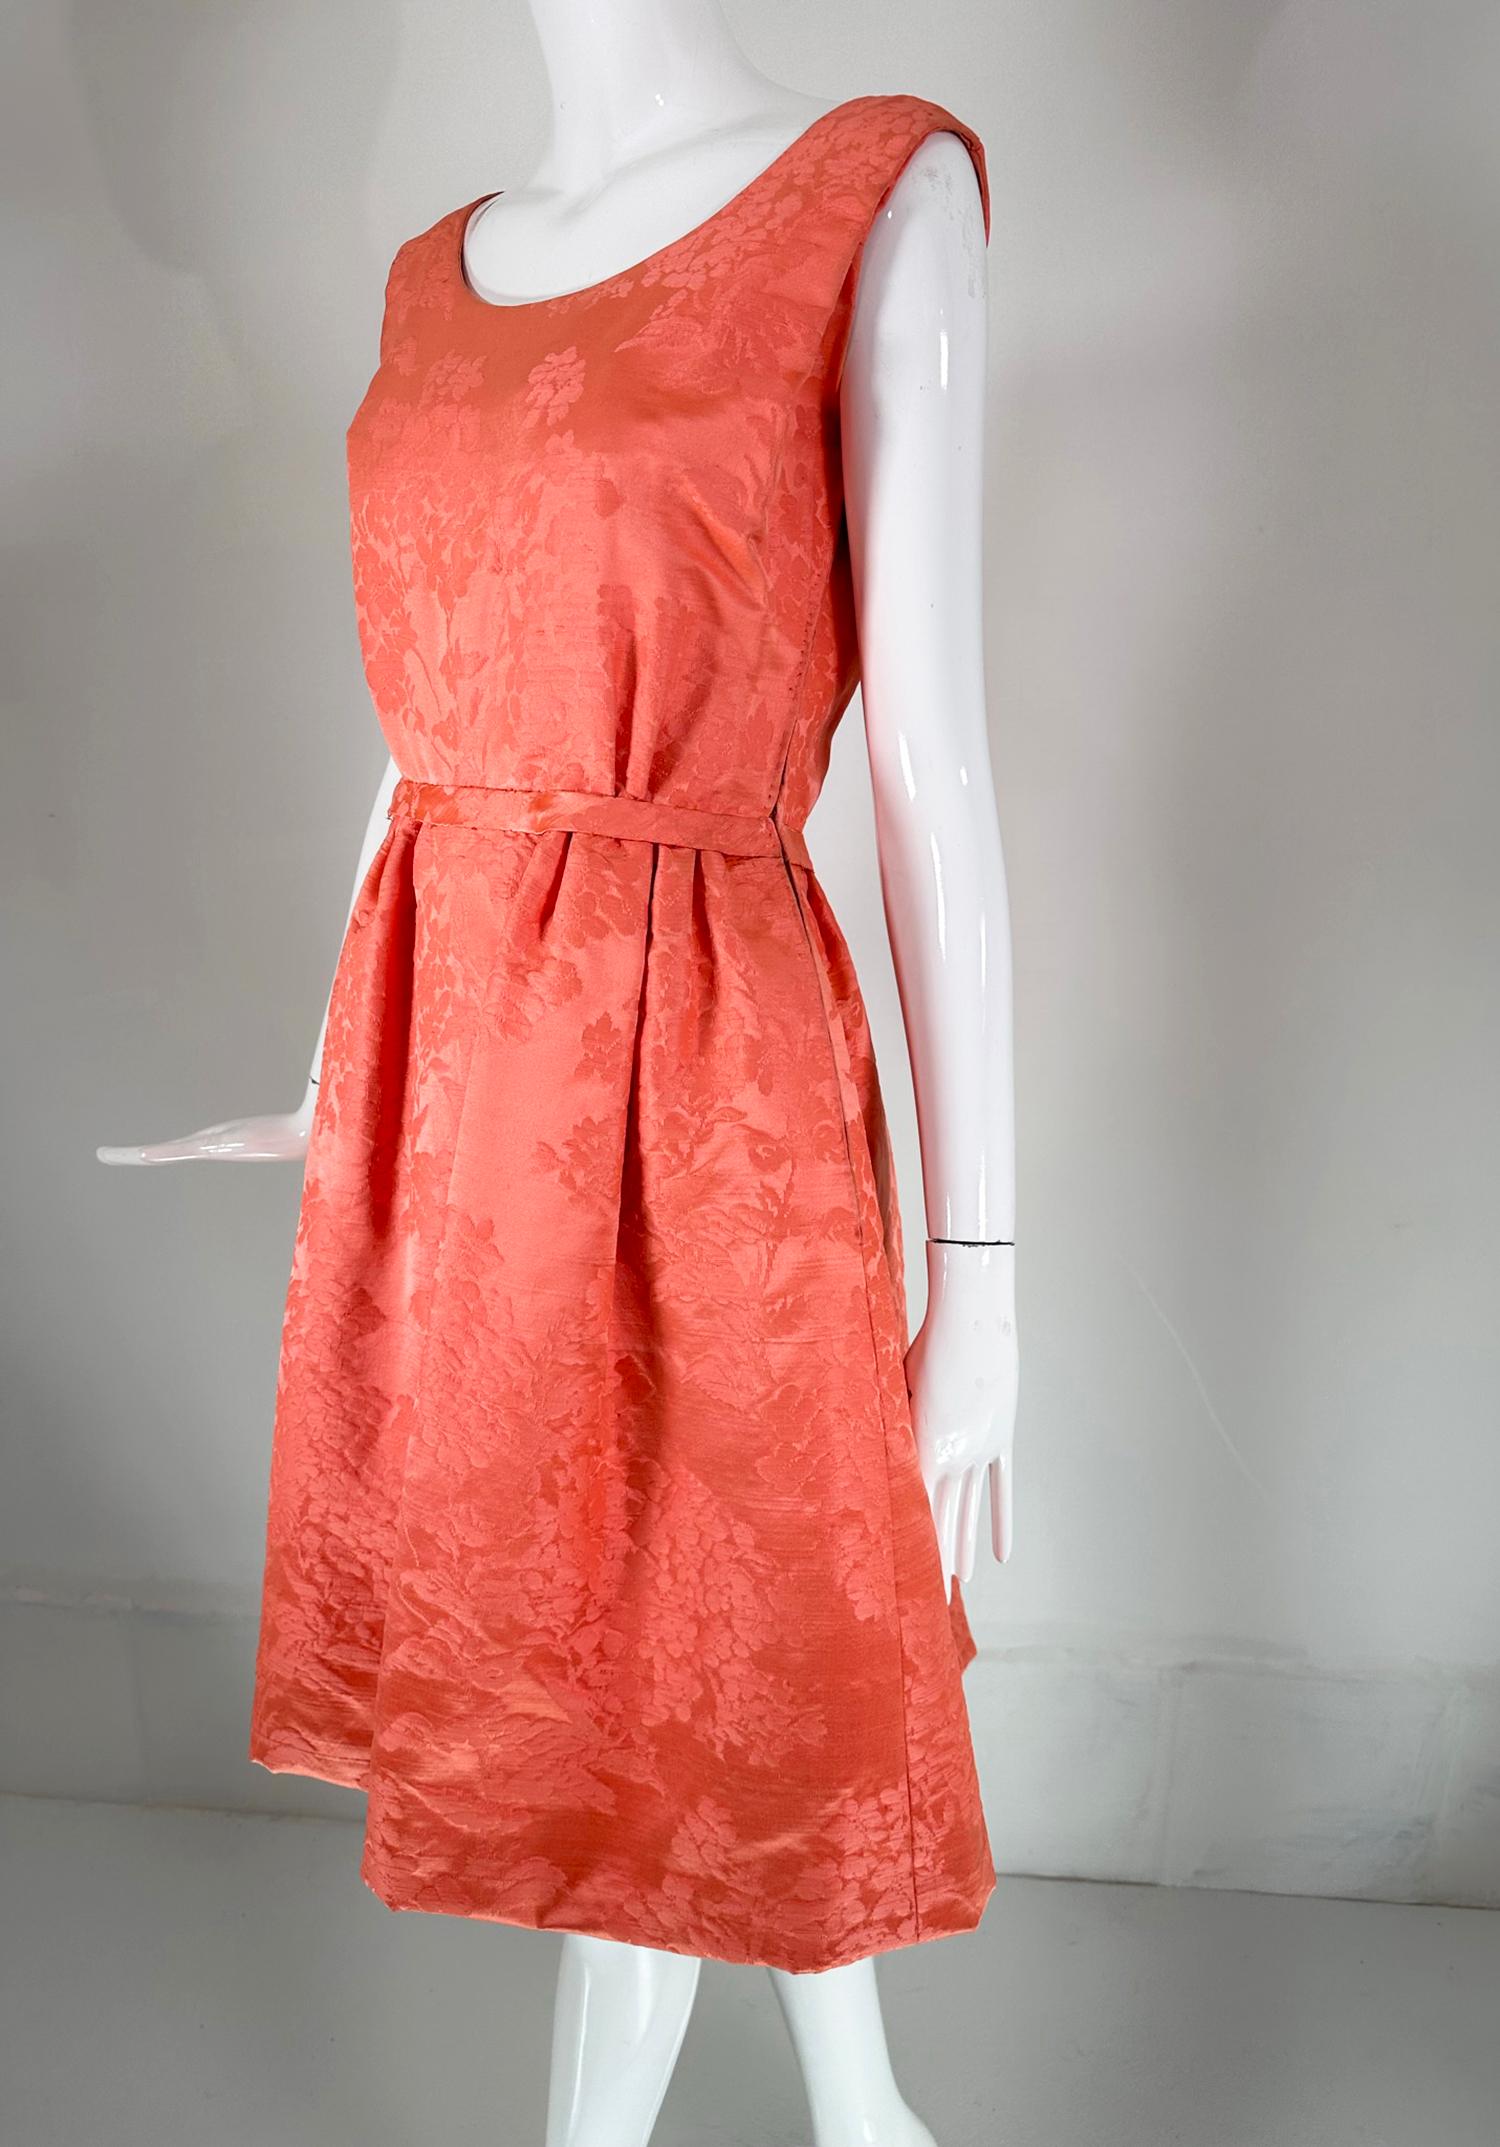 Lanvin Castello Haute Couture Coral Silk Brocade Coat & Dress Ensemble 1950s For Sale 4